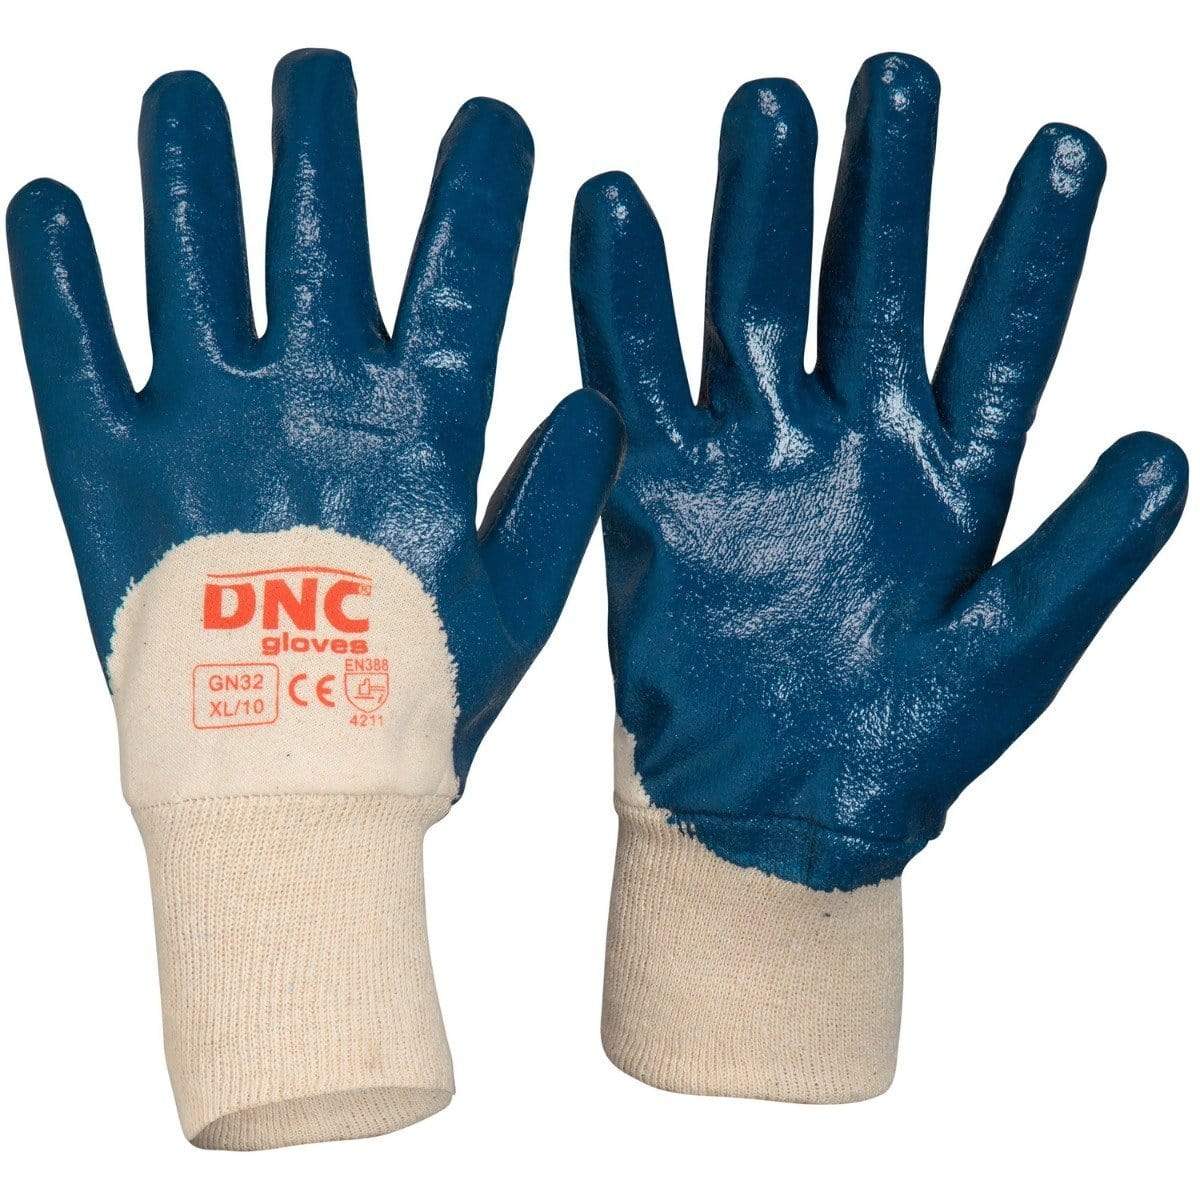 Dnc Workwear Blue Nitrile 3/4 Dip x12 - Gn32 PPE DNC Workwear Blue/Nature XL/10 